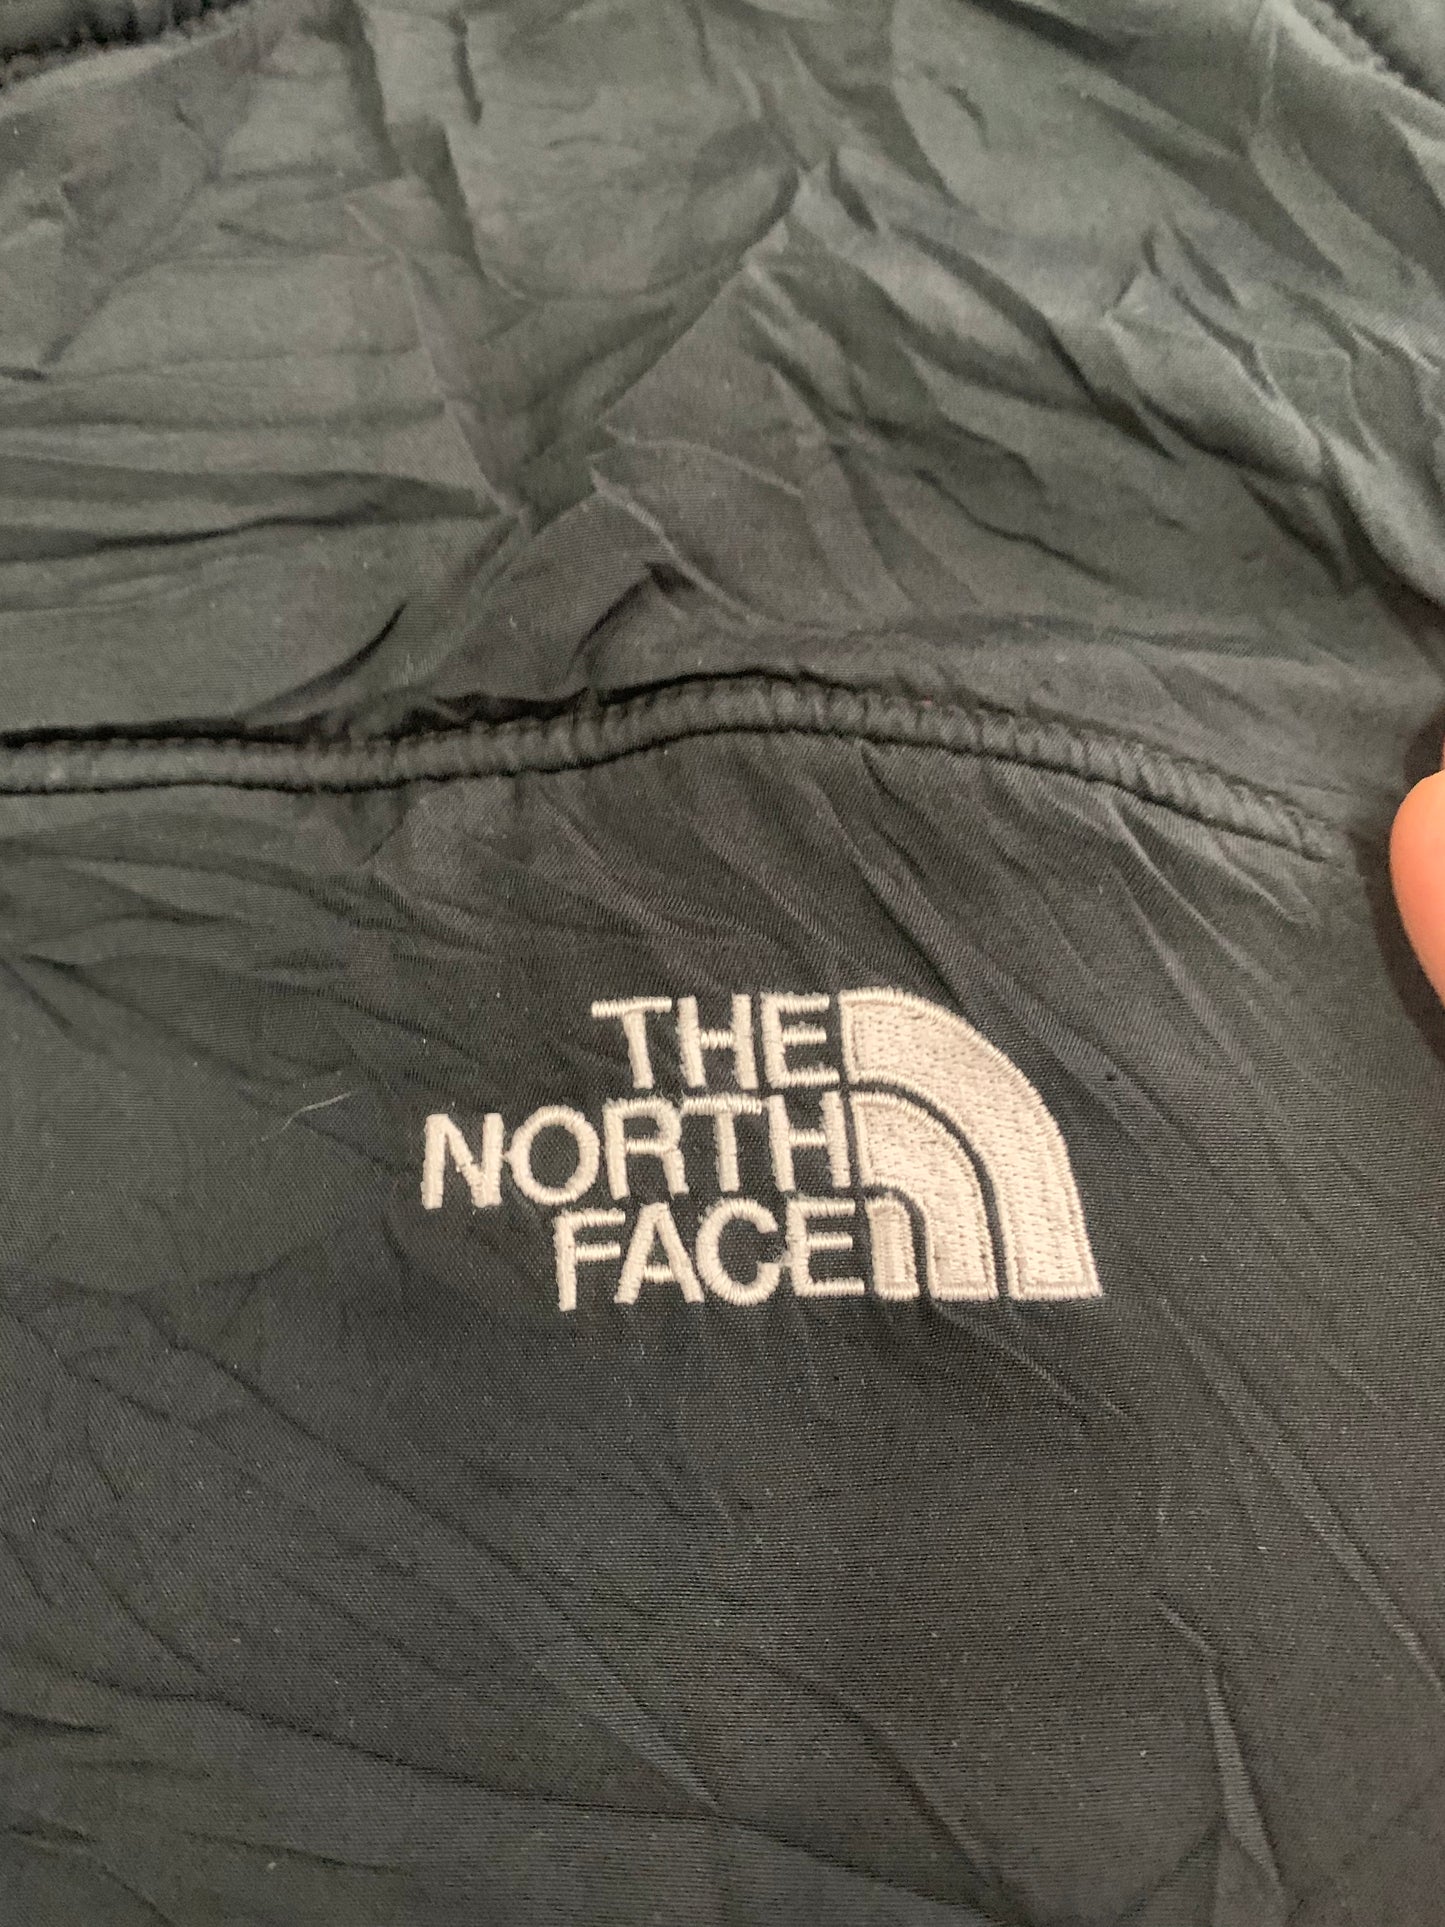 The North Face Vintage Fleece - M